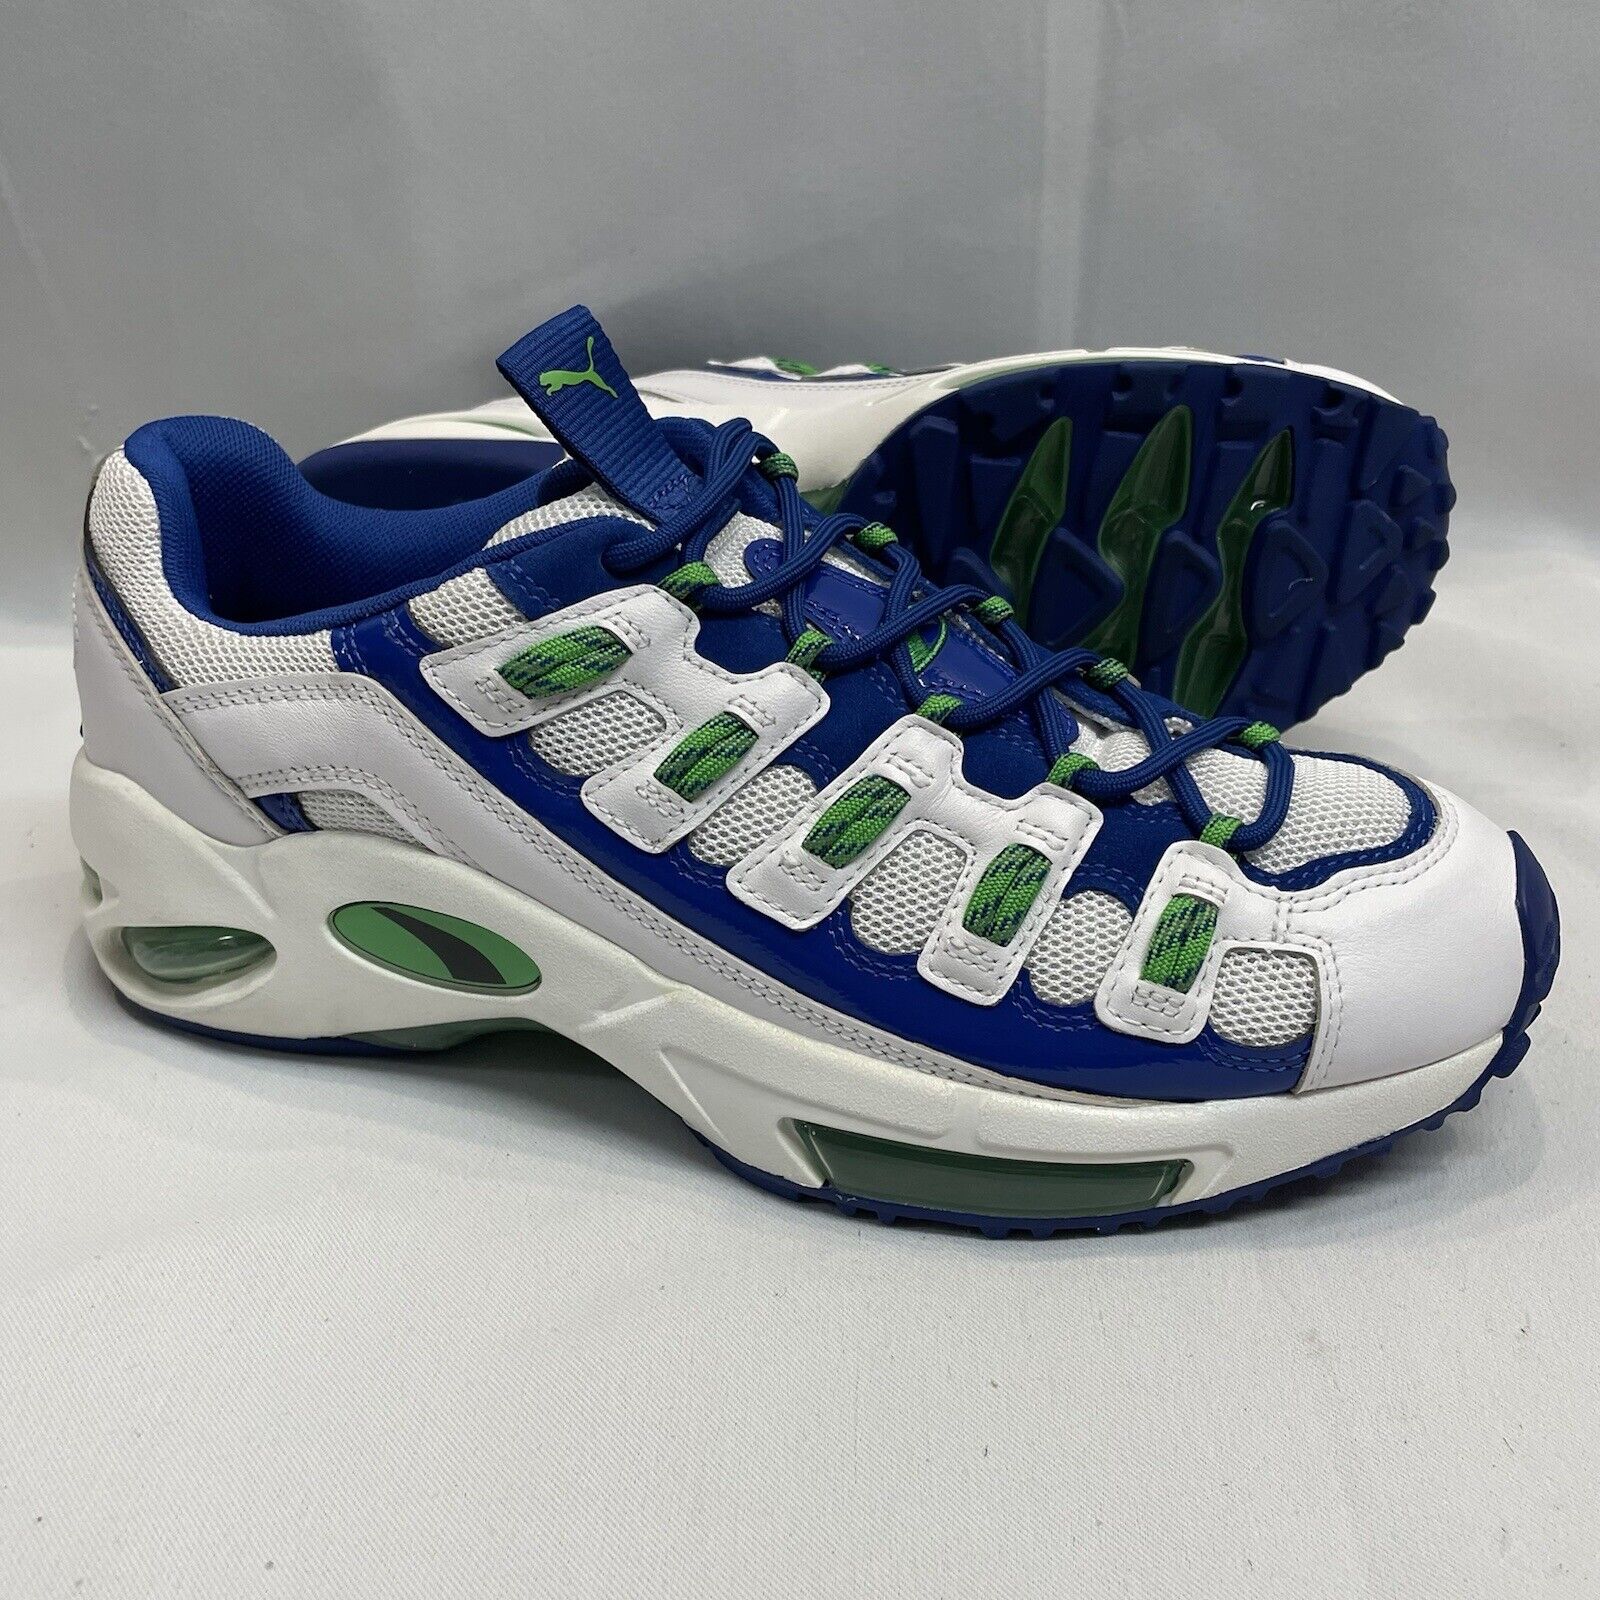 Puma Cell Endura Patent 98 Men's Size 10.5 369633 01 Blue / White Sneakers | eBay